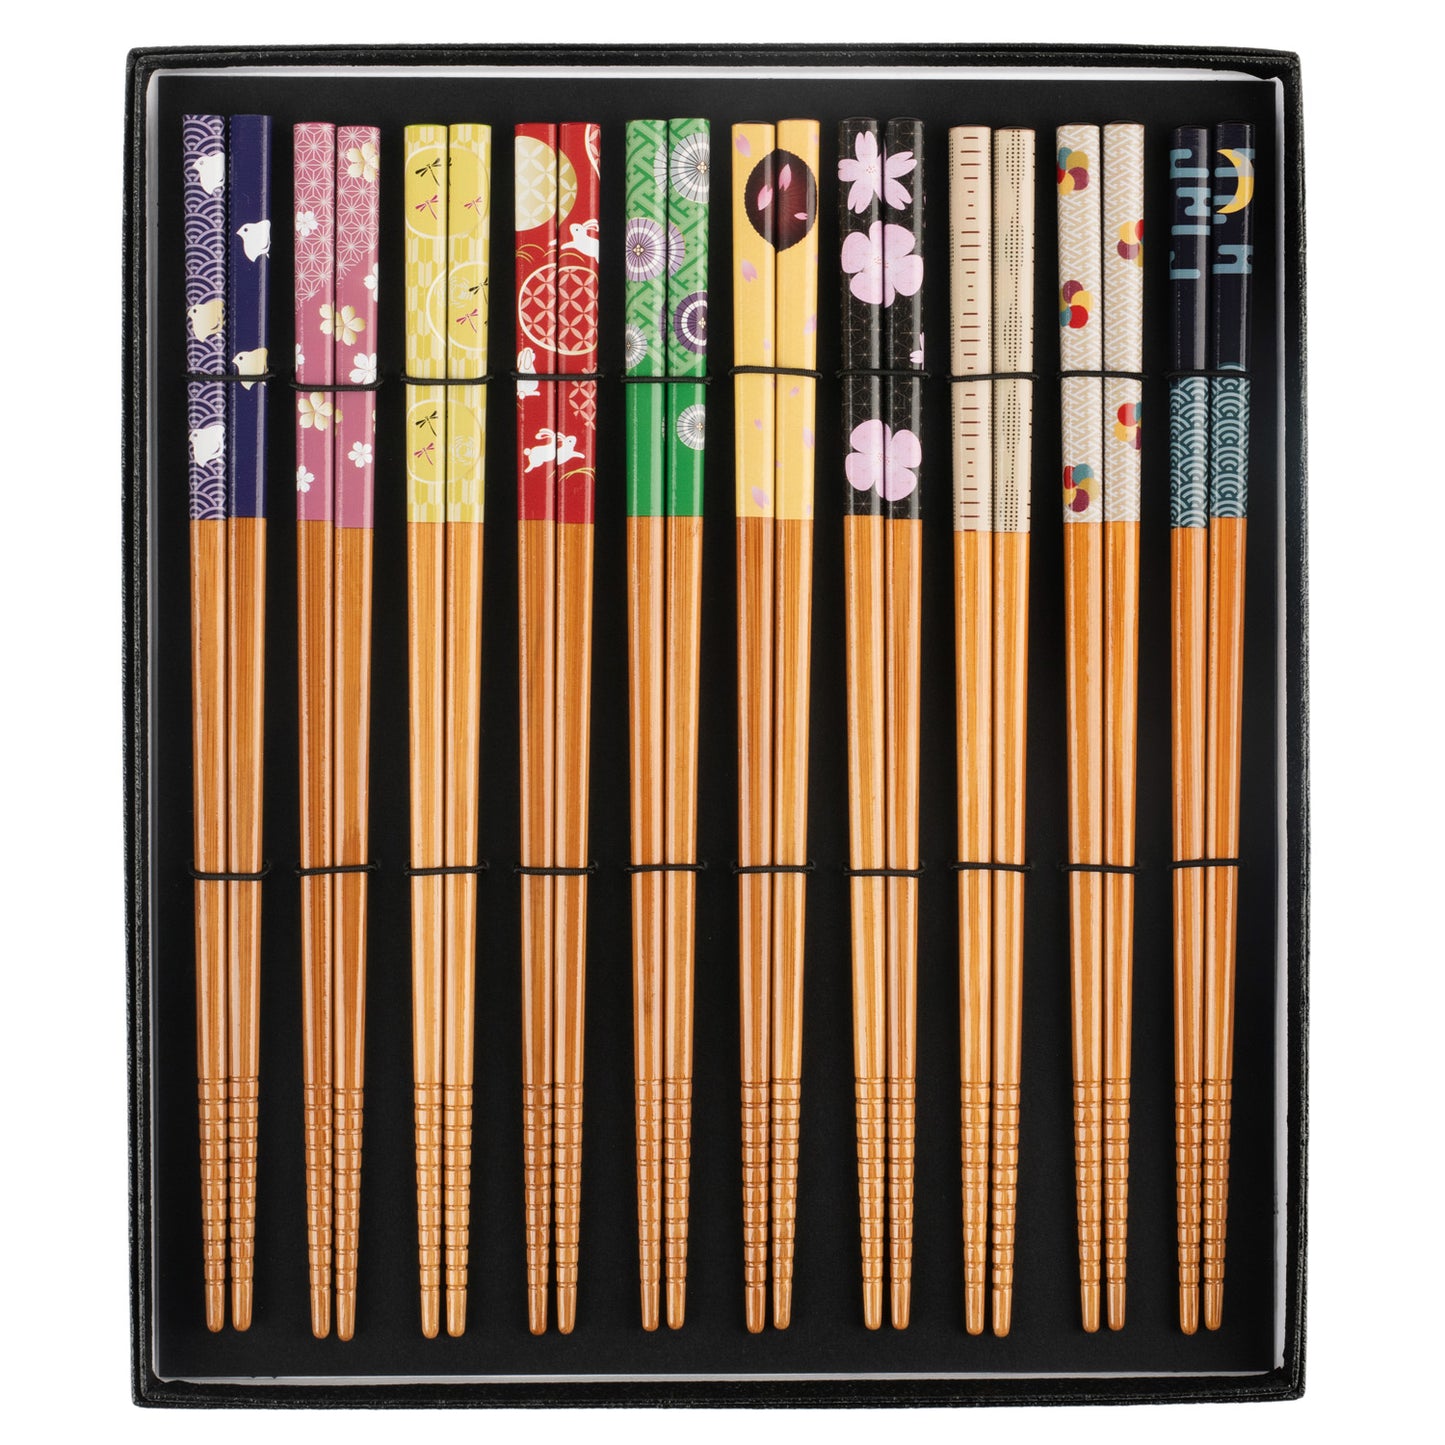 Elegance of Japan Japanese Chopstick Gift Set in gift box